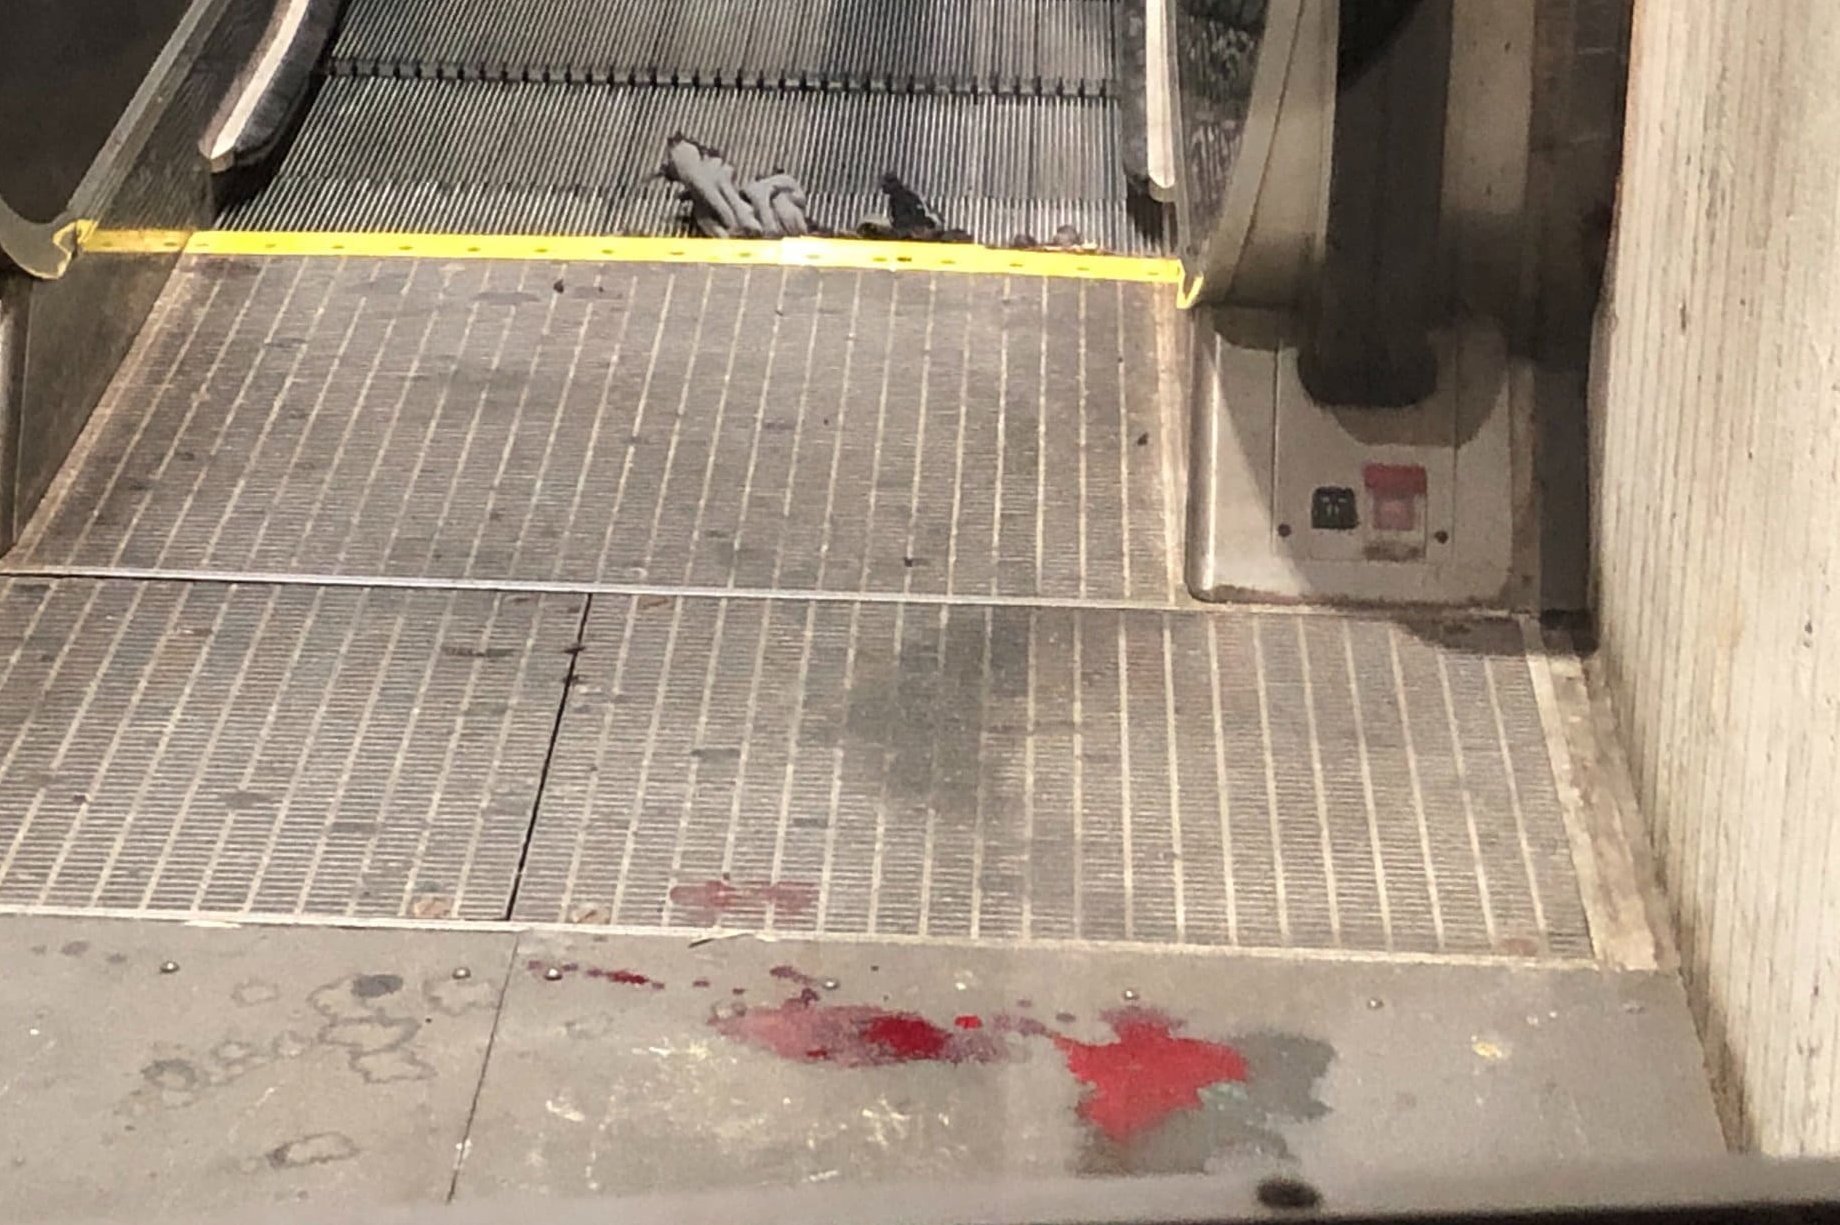 Man found dead in New Carrollton station walked wrong way on escalator